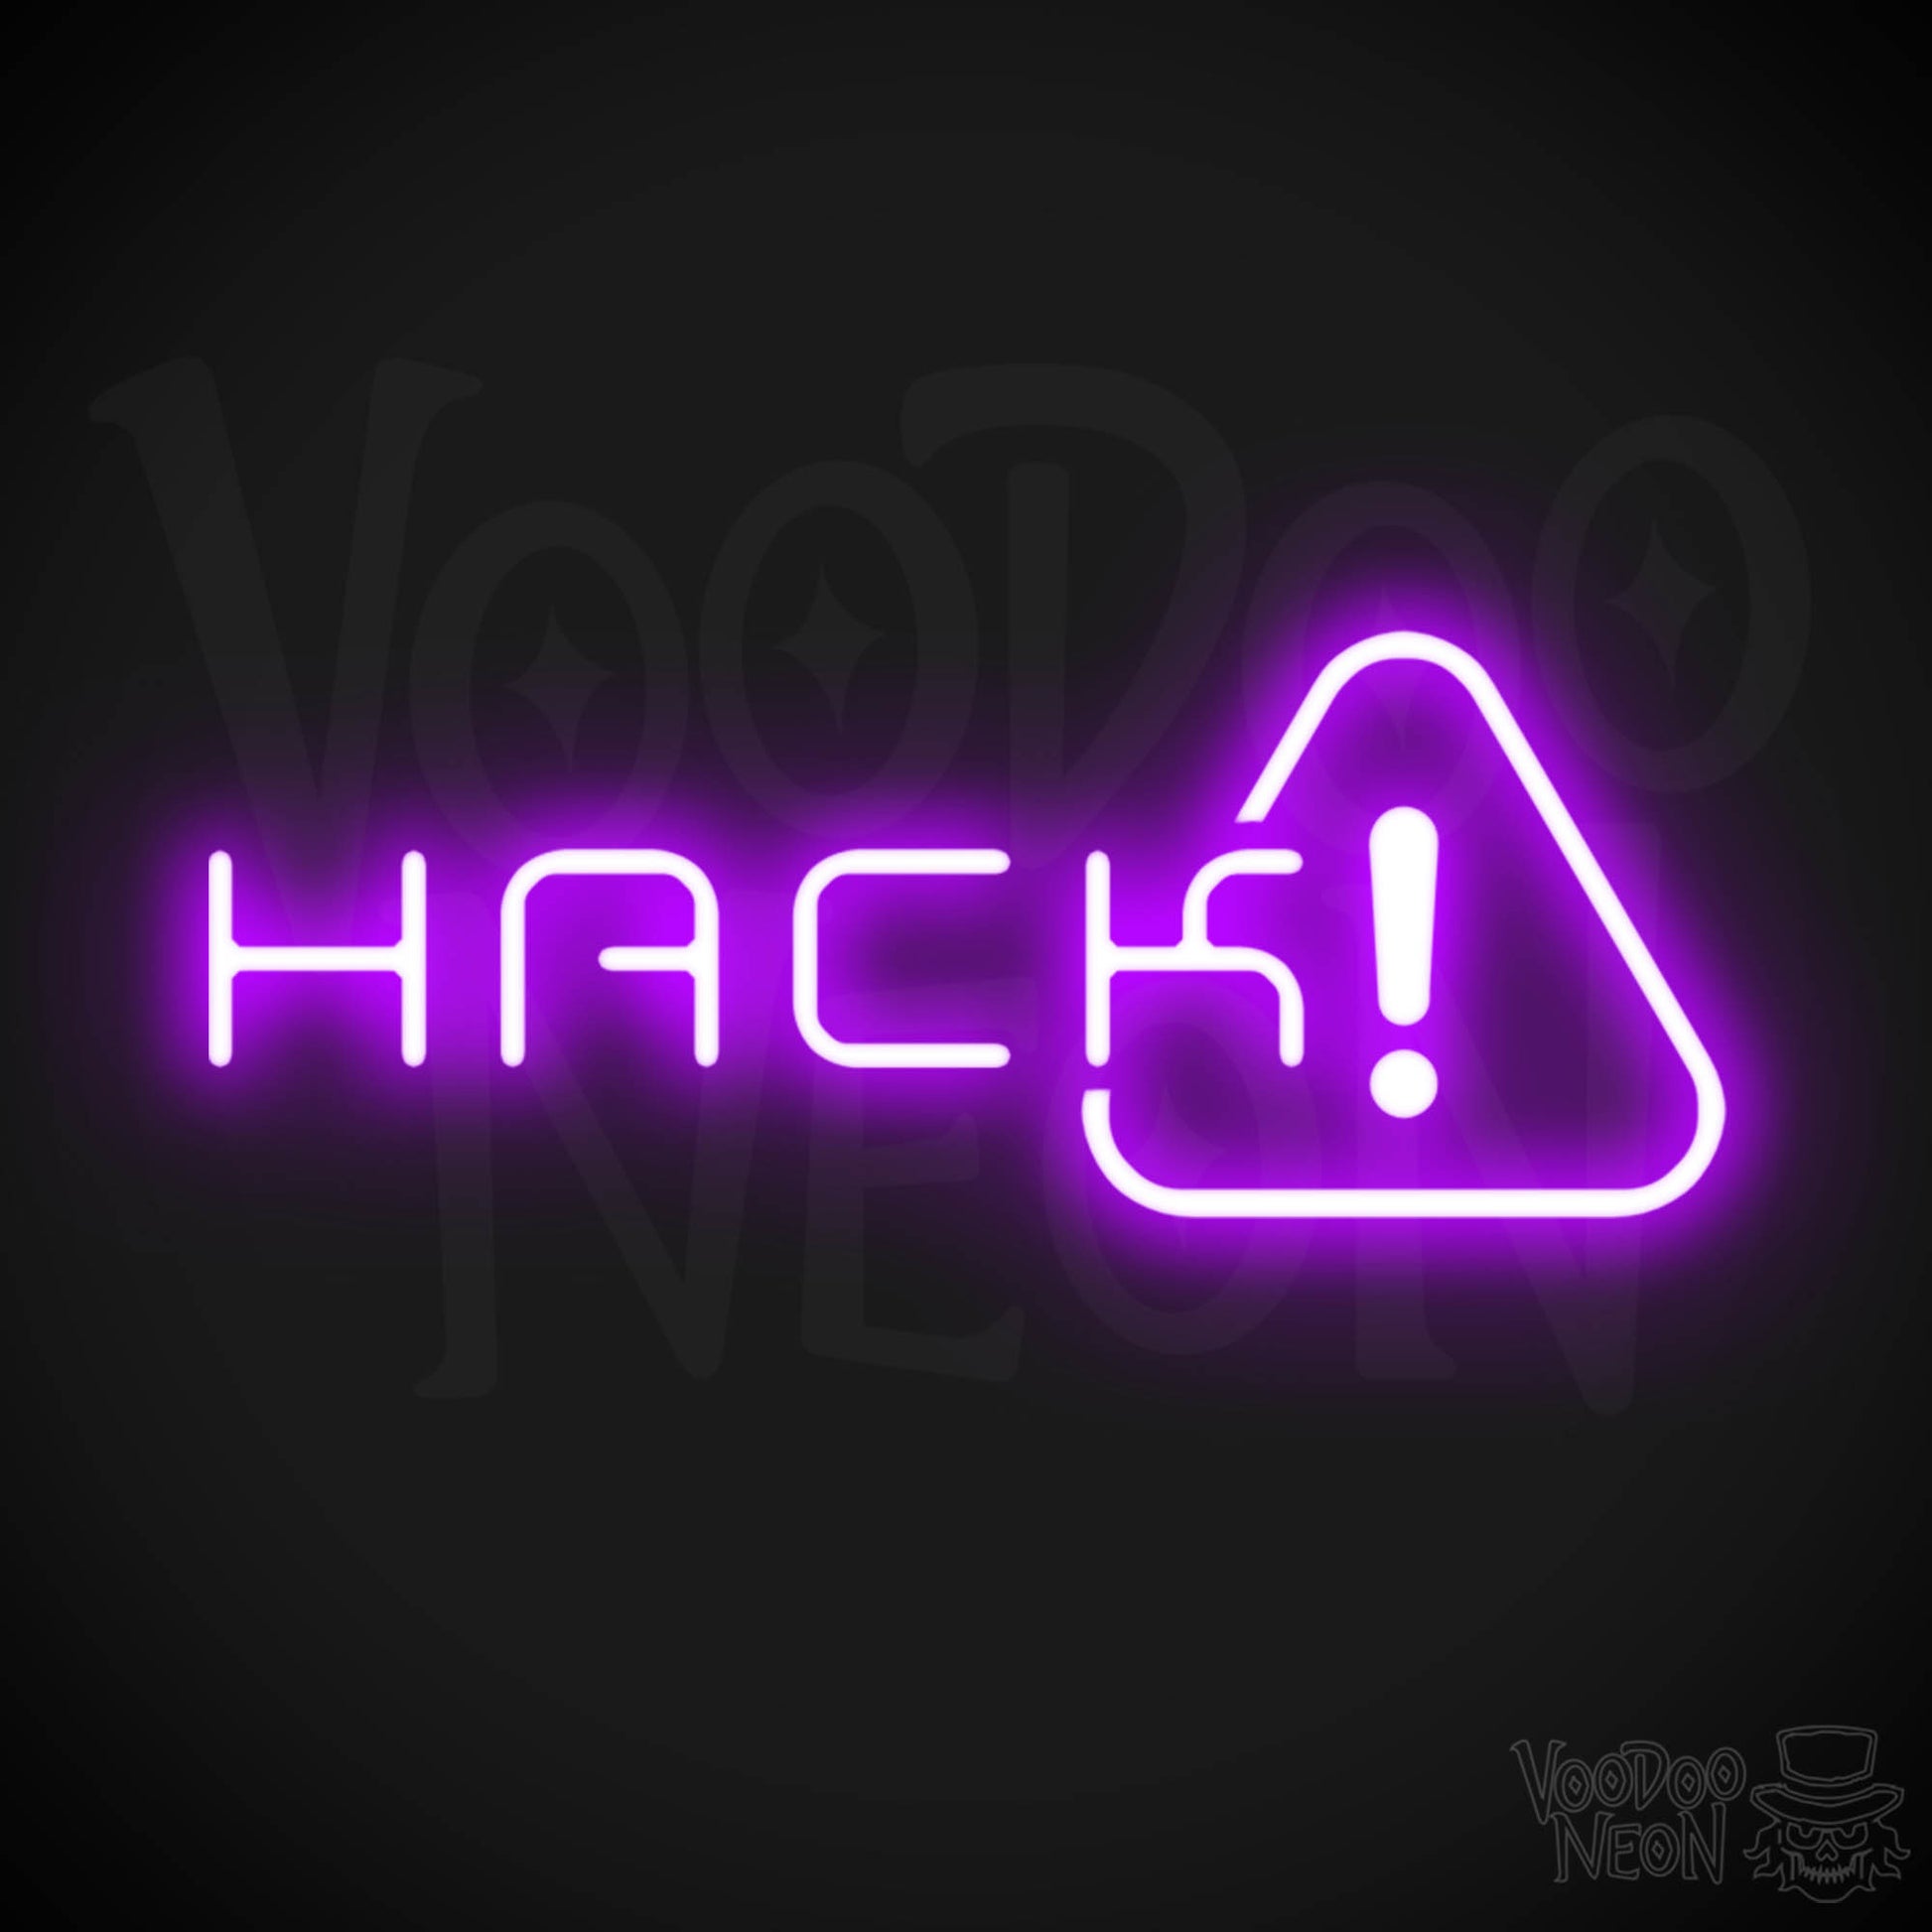 Hack Neon Sign - Neon Hack Sign - Word Sign - Color Purple